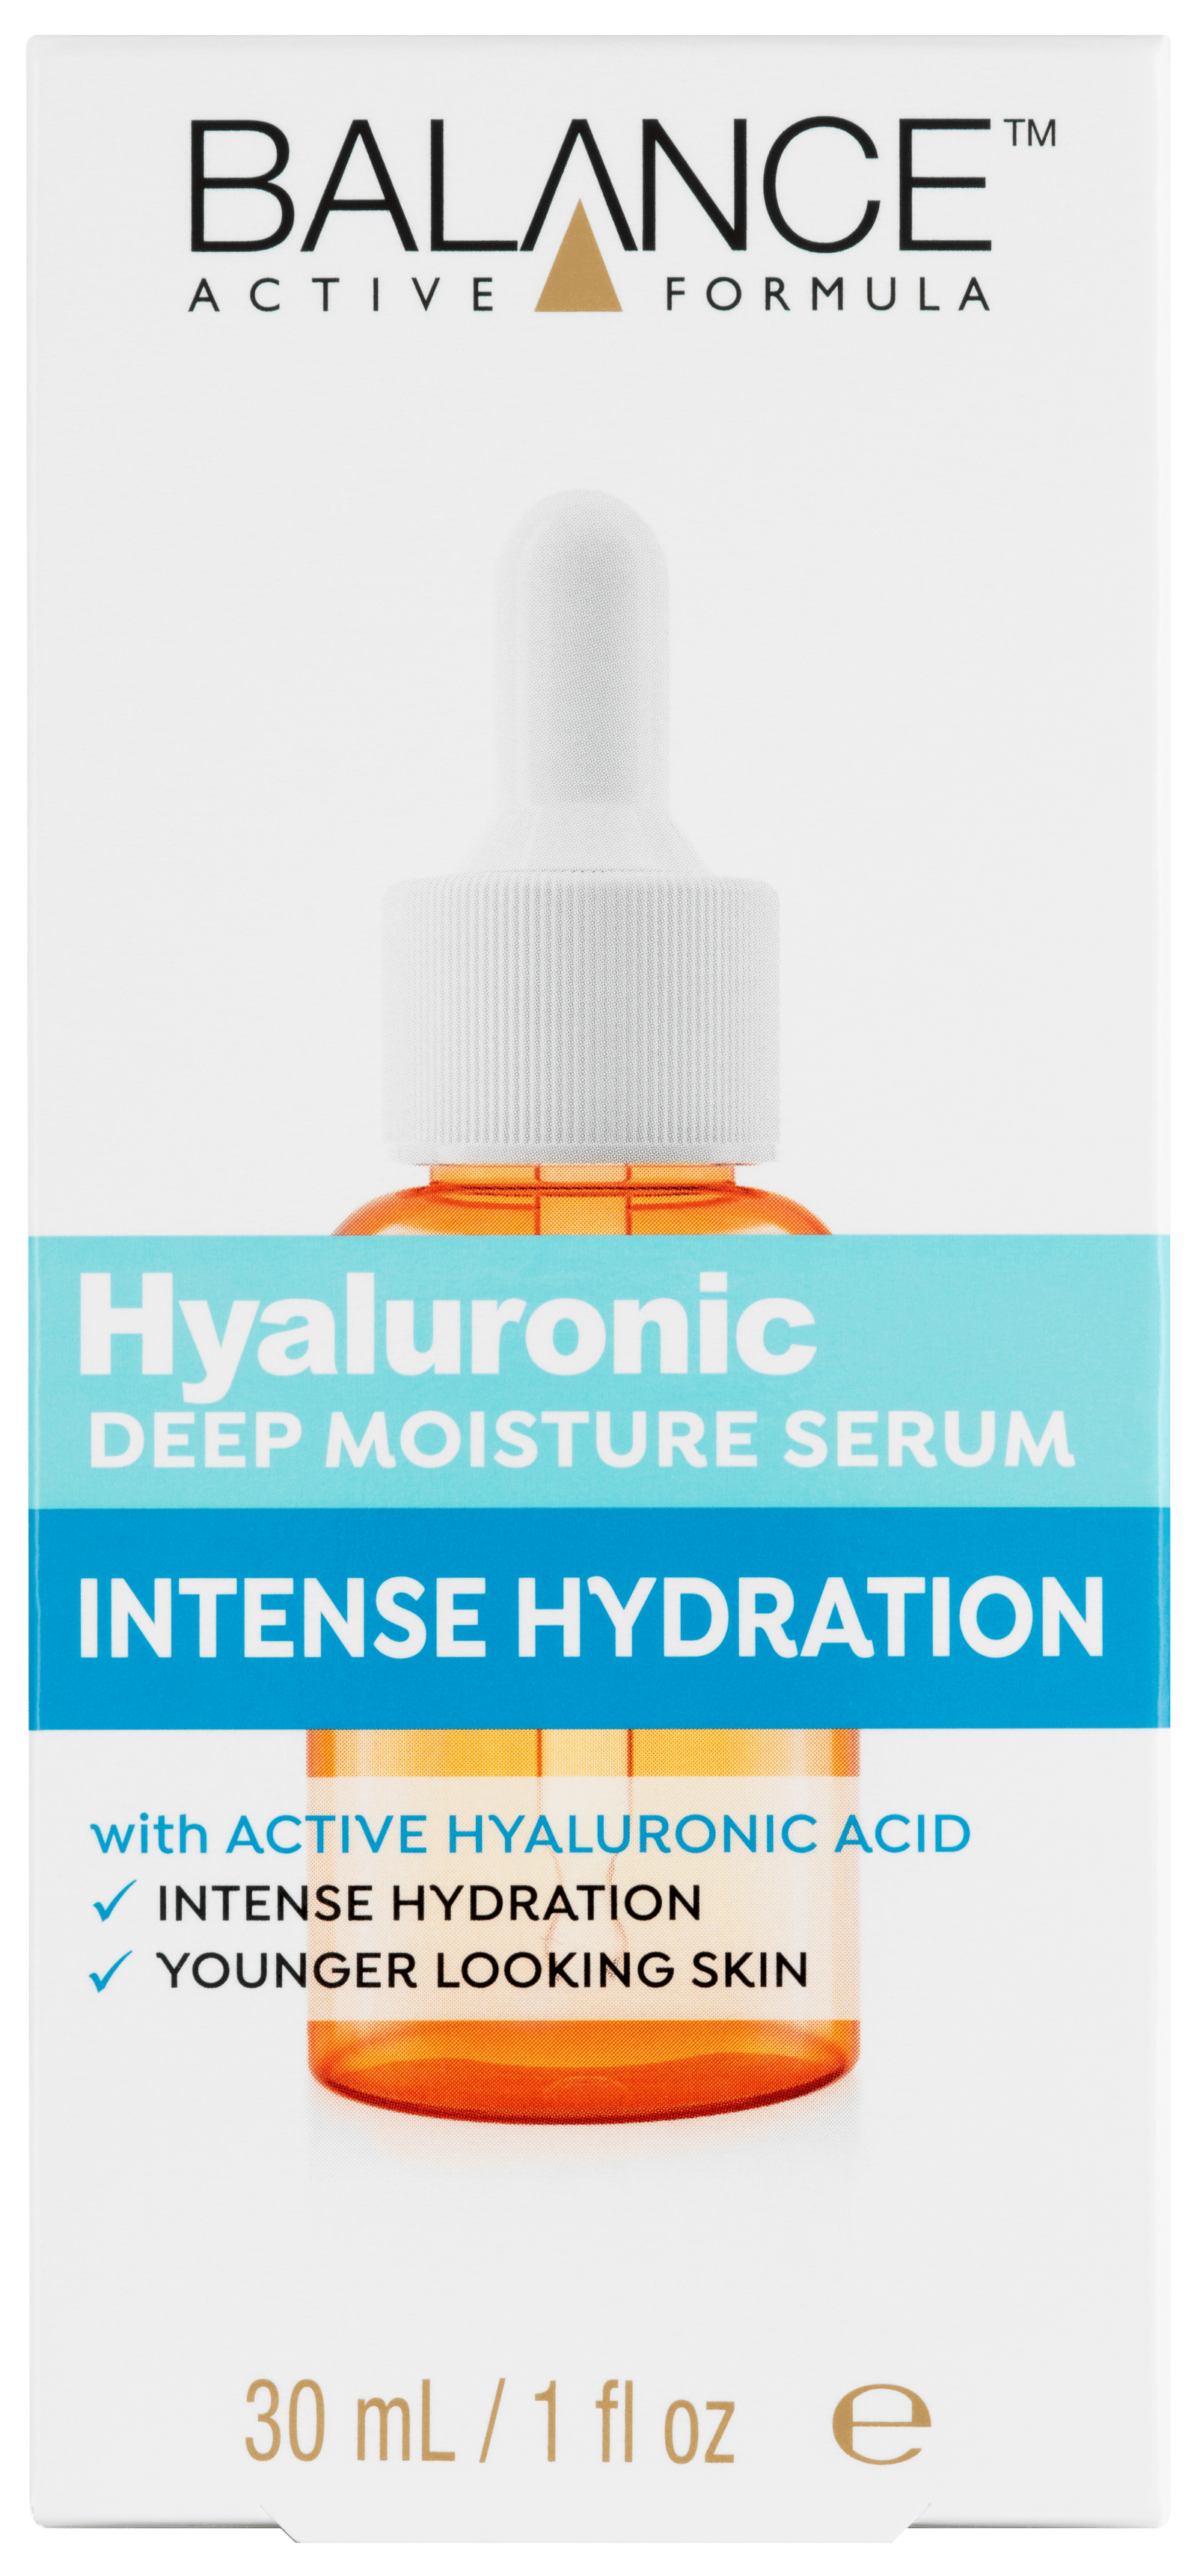 Balance Active Formula Hyaluronic Deep Moisture Serum 30 ml